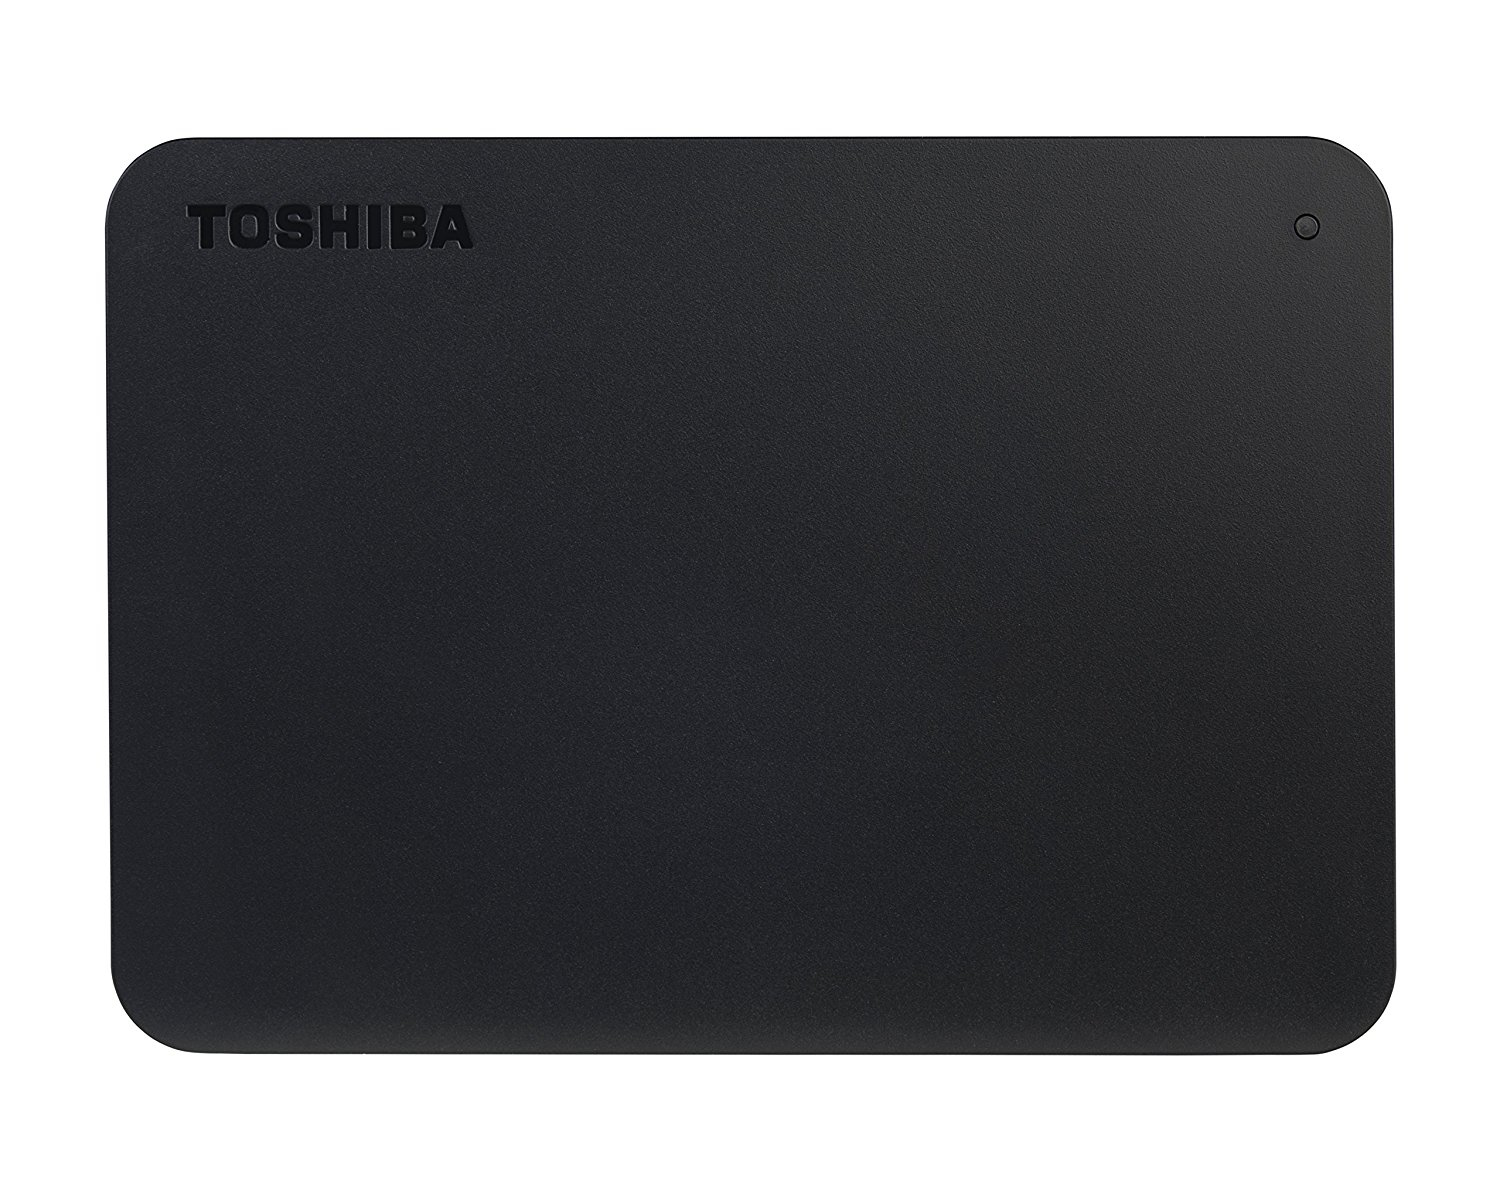 HD 1TB EST. 2.5 TOSHIBA USB 3.0 BK